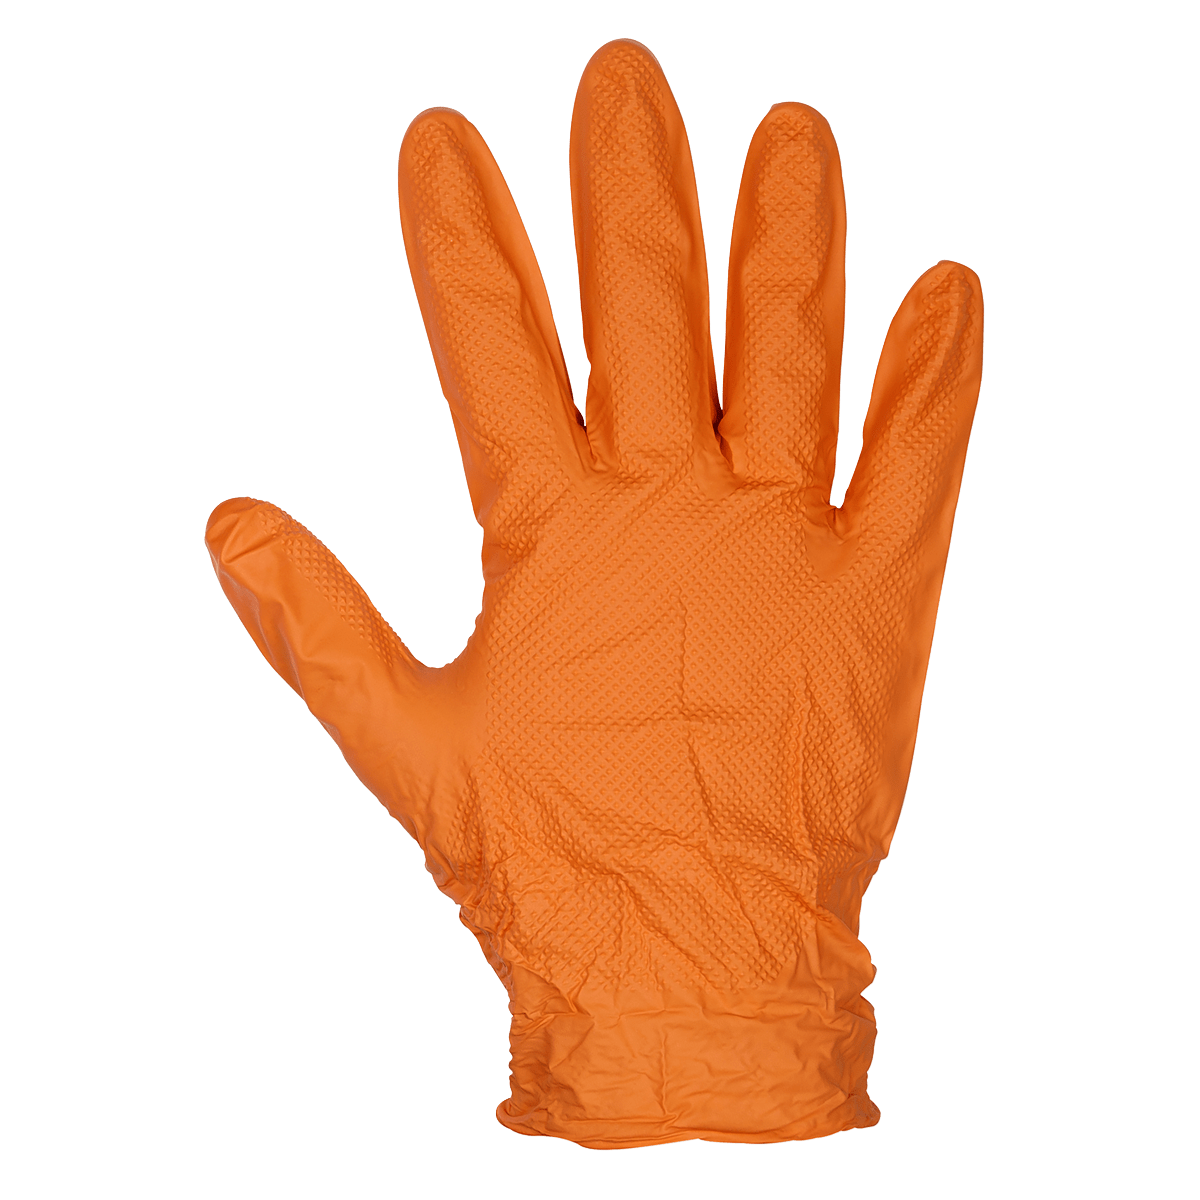 Sealey Orange Diamond Grip Extra-Thick Nitrile Powder- Free Gloves - Pack of 50